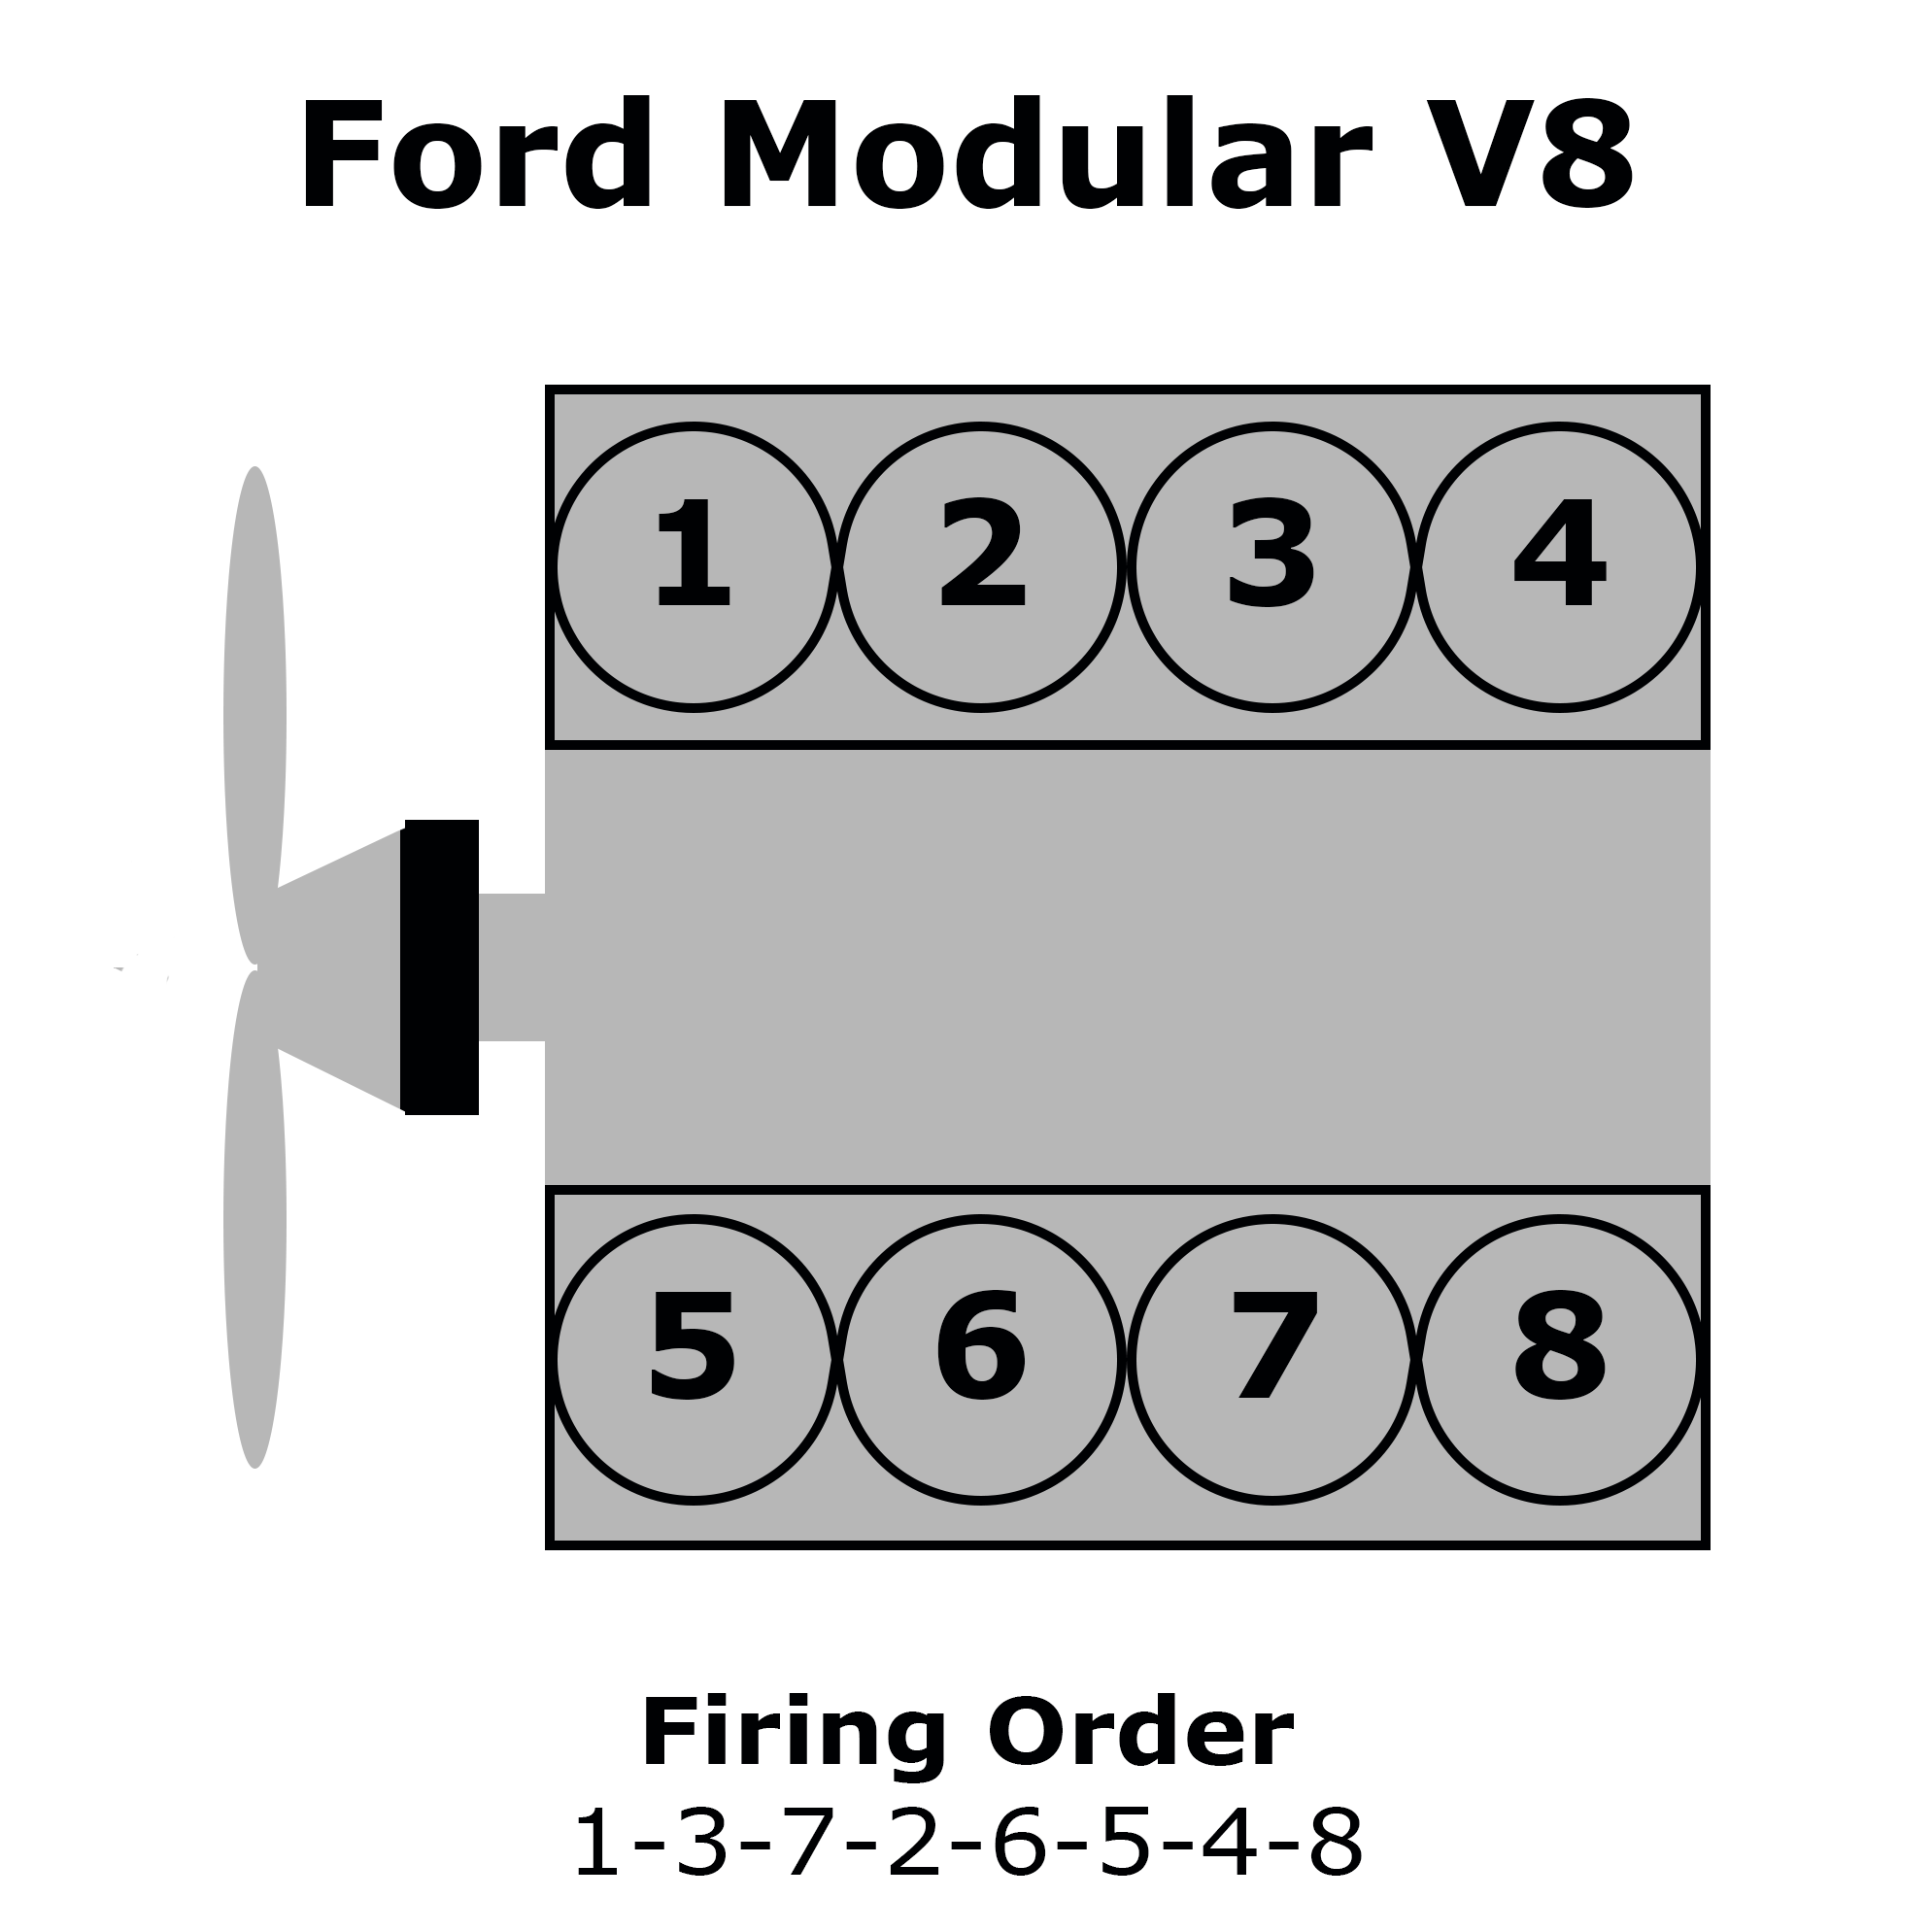 Ford Kent Firing Order